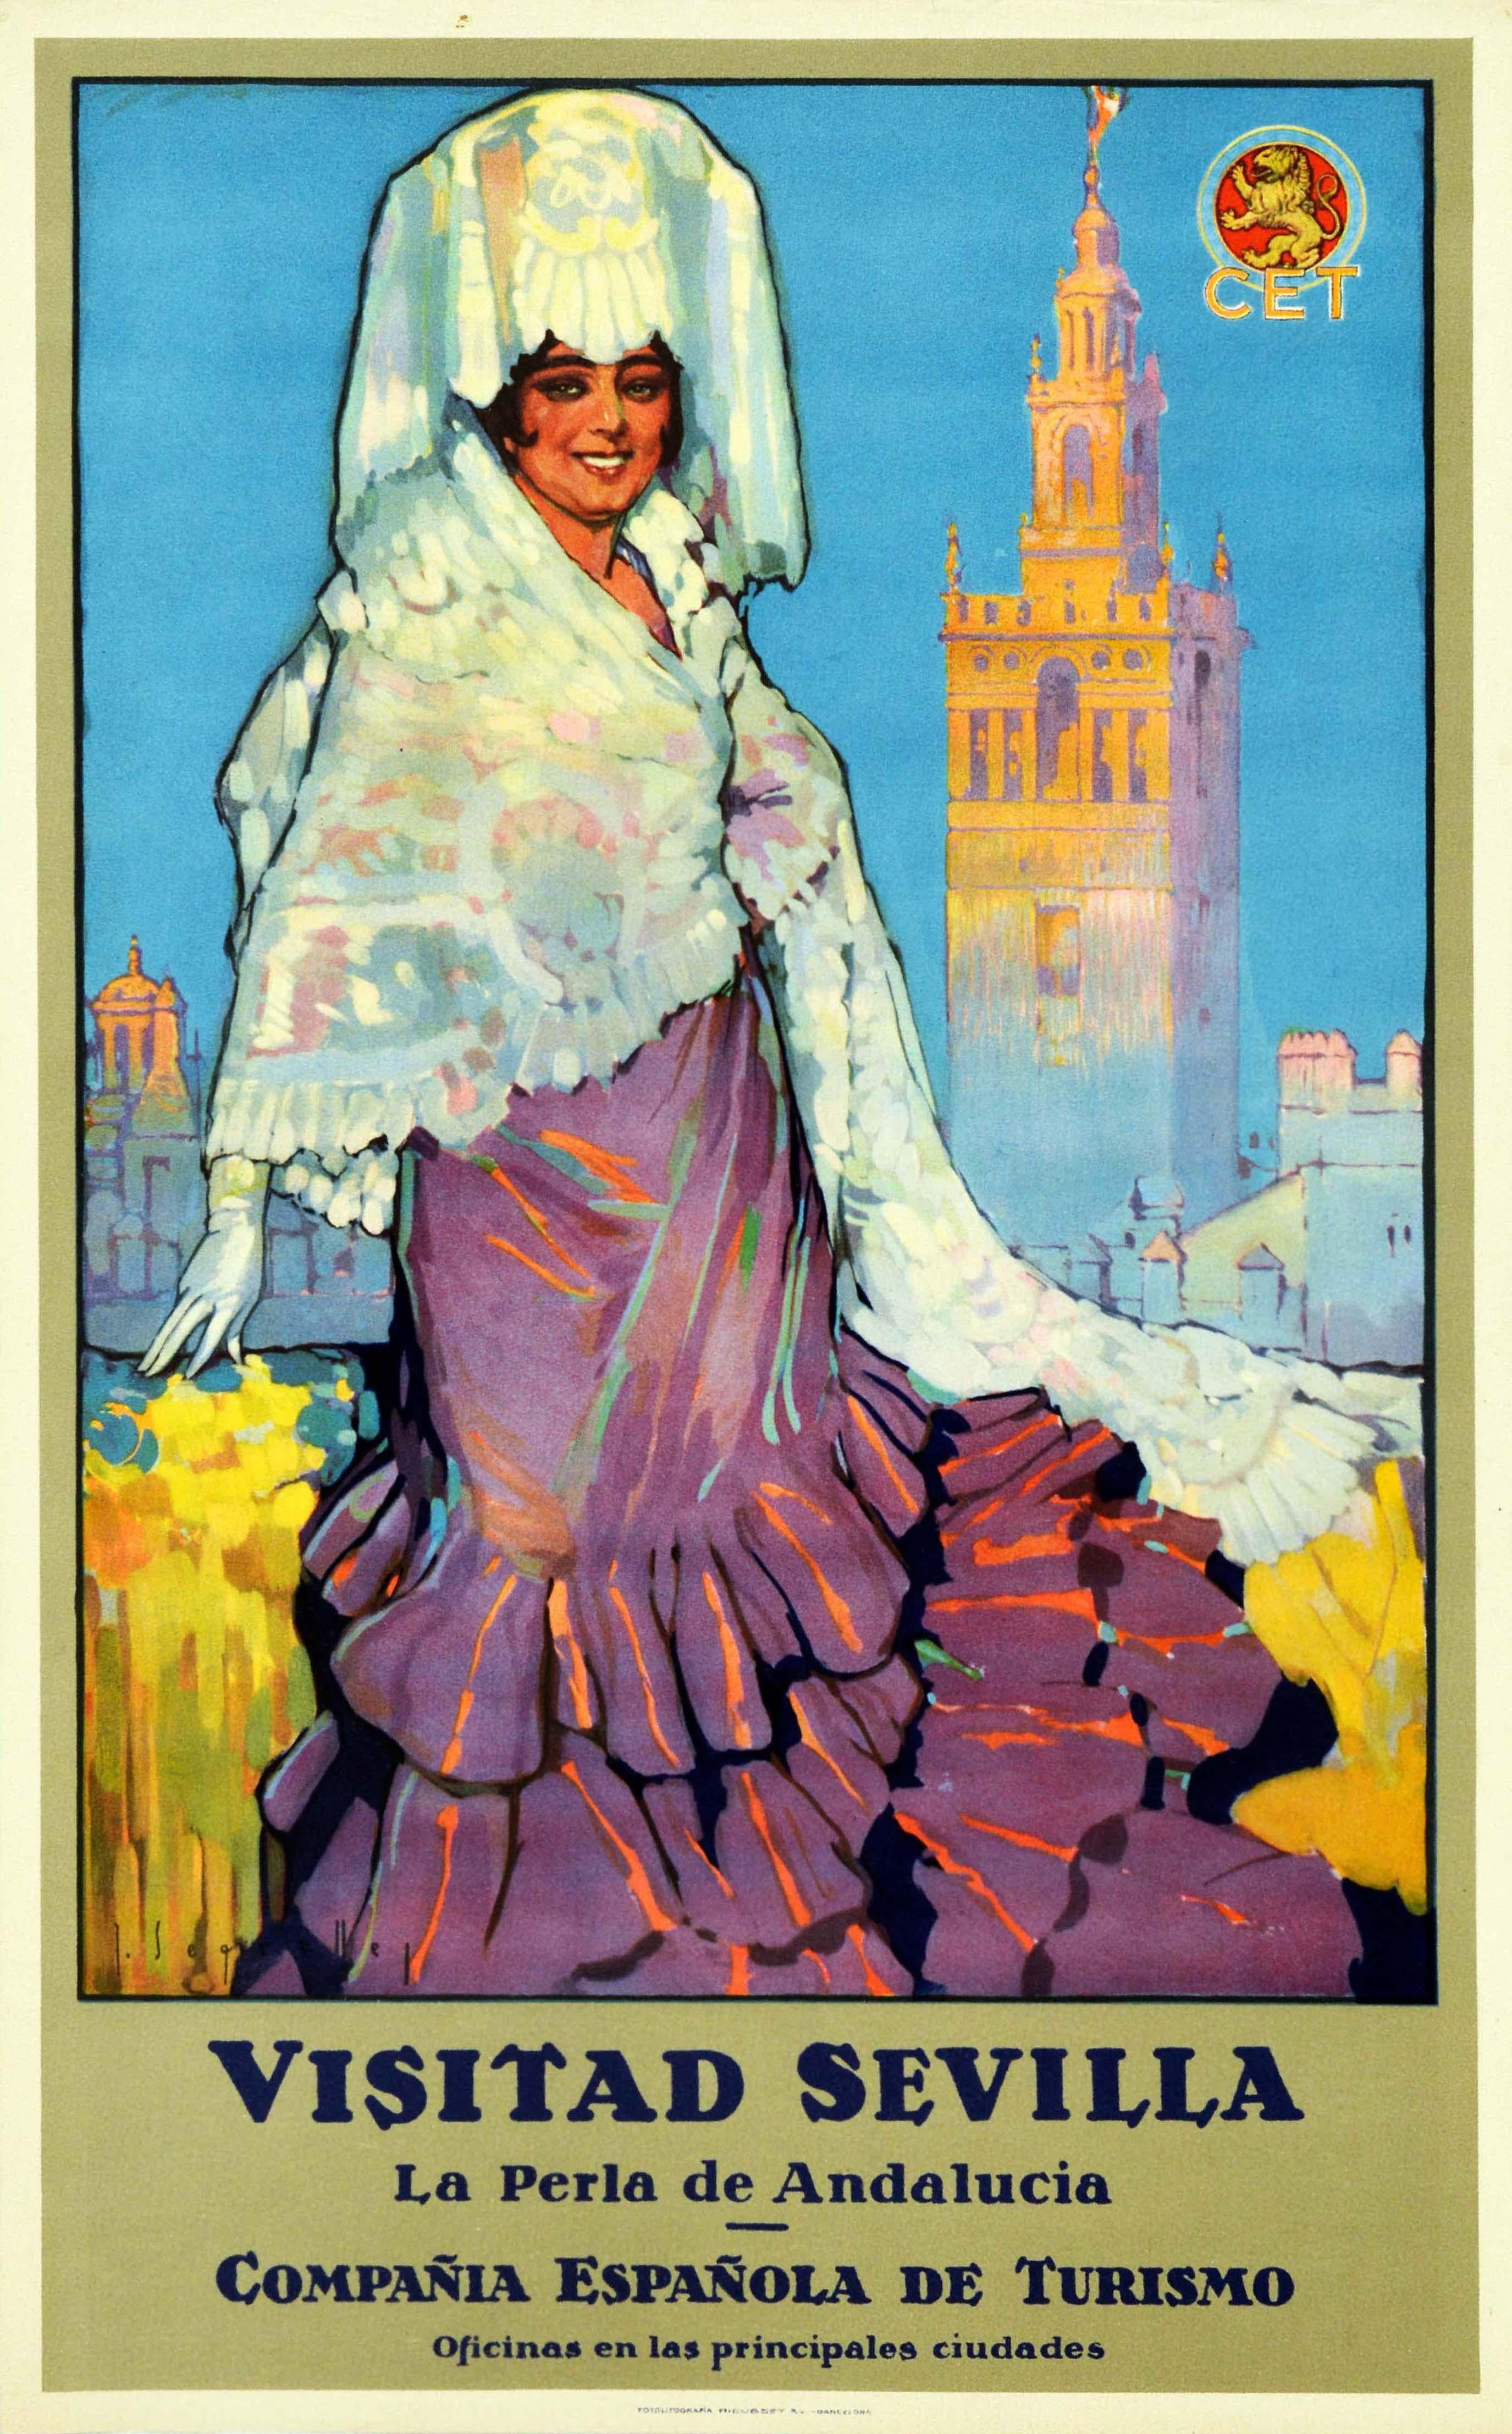 J. Segrelles Print - Original Vintage Travel Poster Visitad Sevilla Andalucia Spain Seville Andalusia